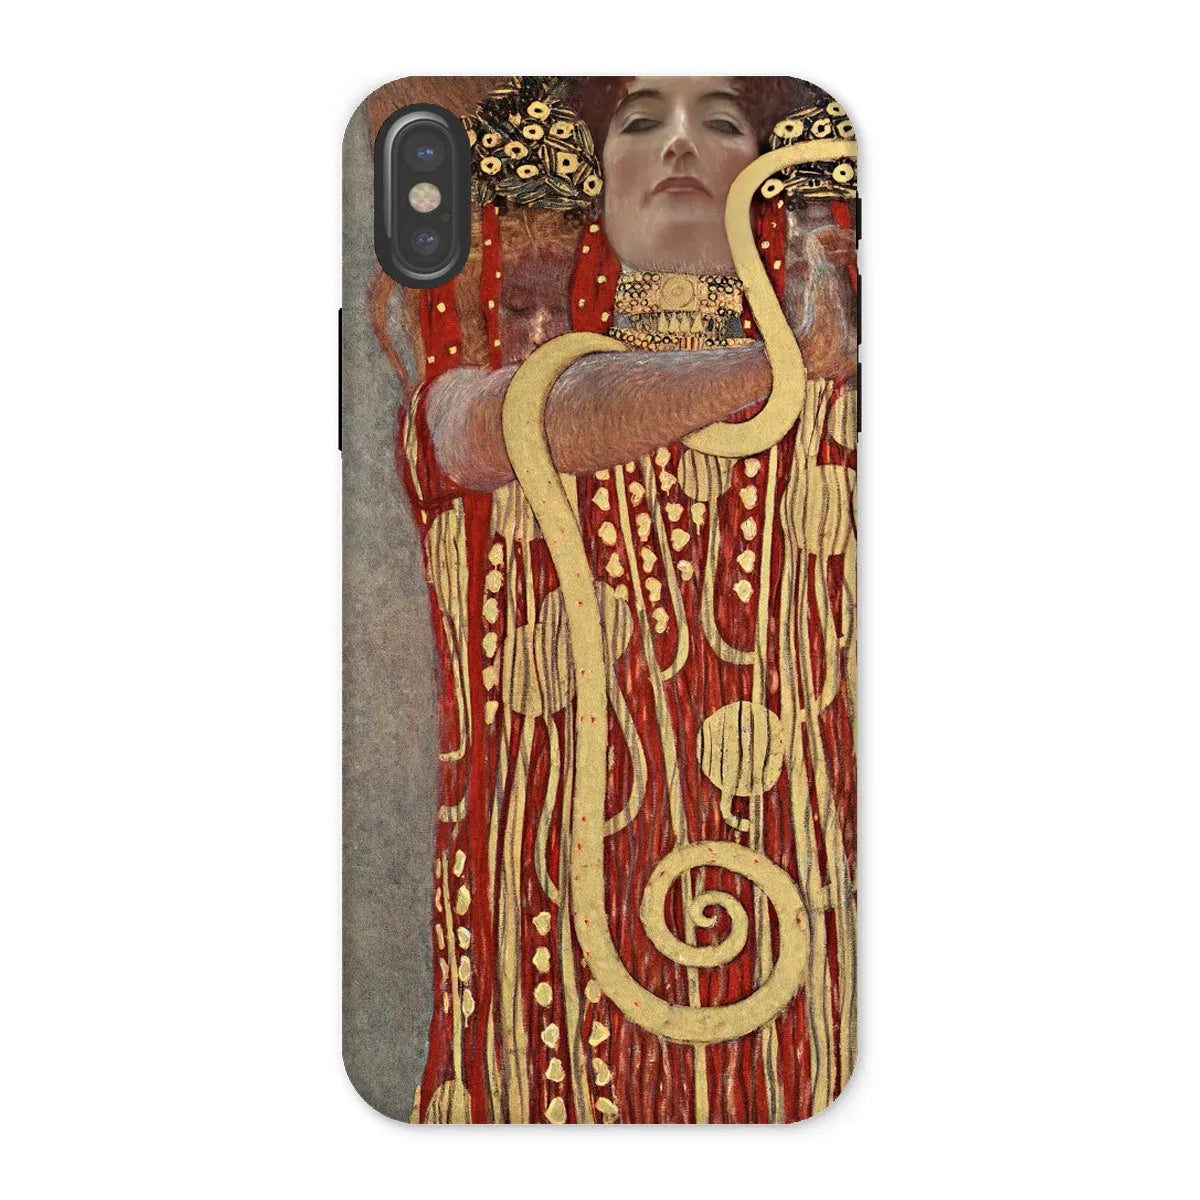 Hygieia - Gustav Klimt Ancient Greek Goddess Art Phone Case - Iphone x / Matte - Mobile Phone Cases - Aesthetic Art